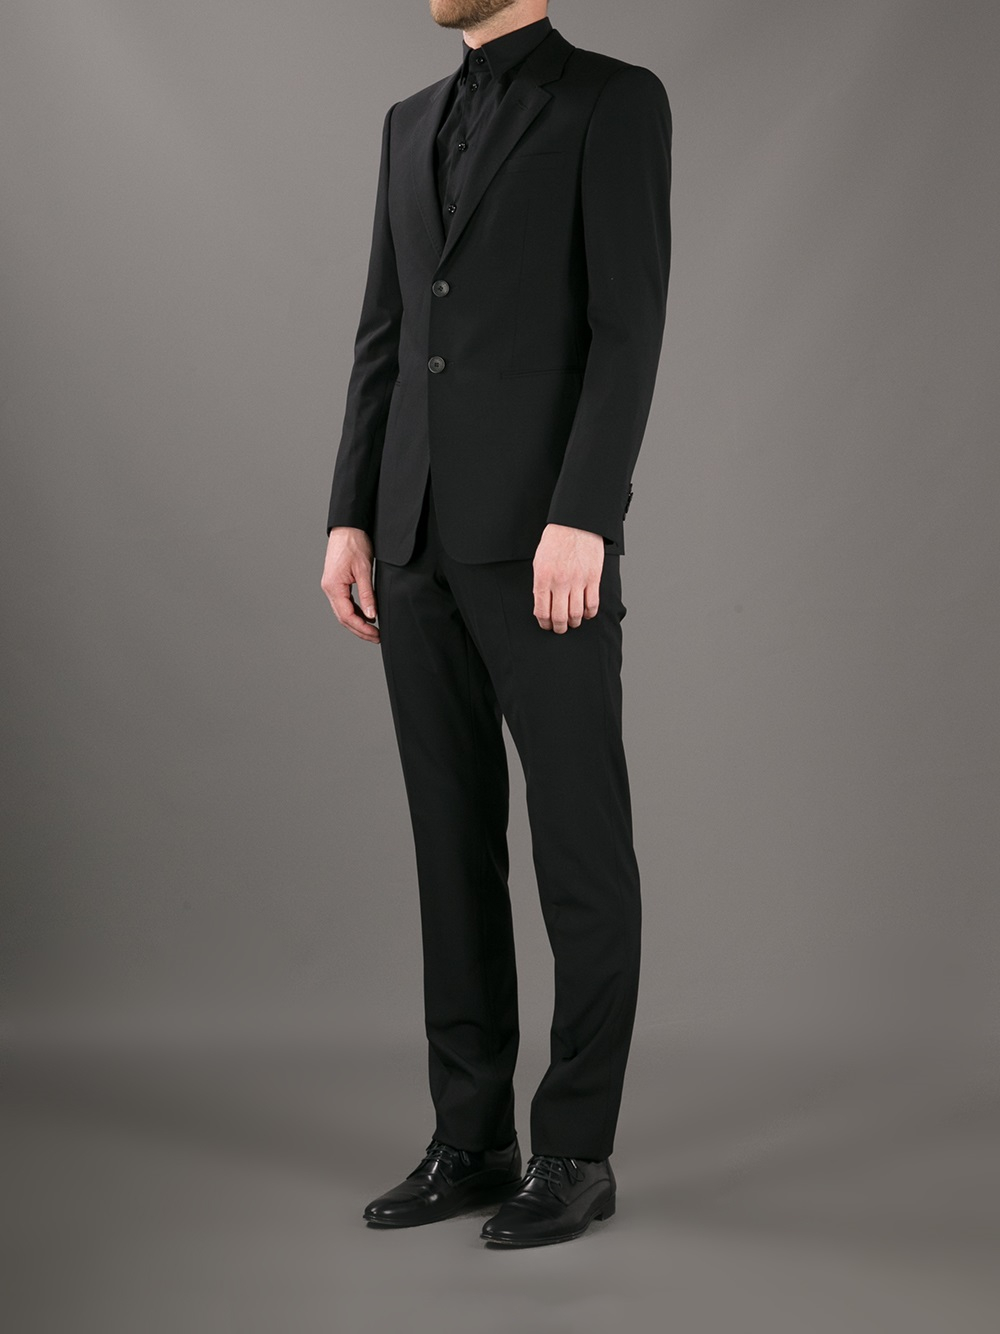 armani black suit